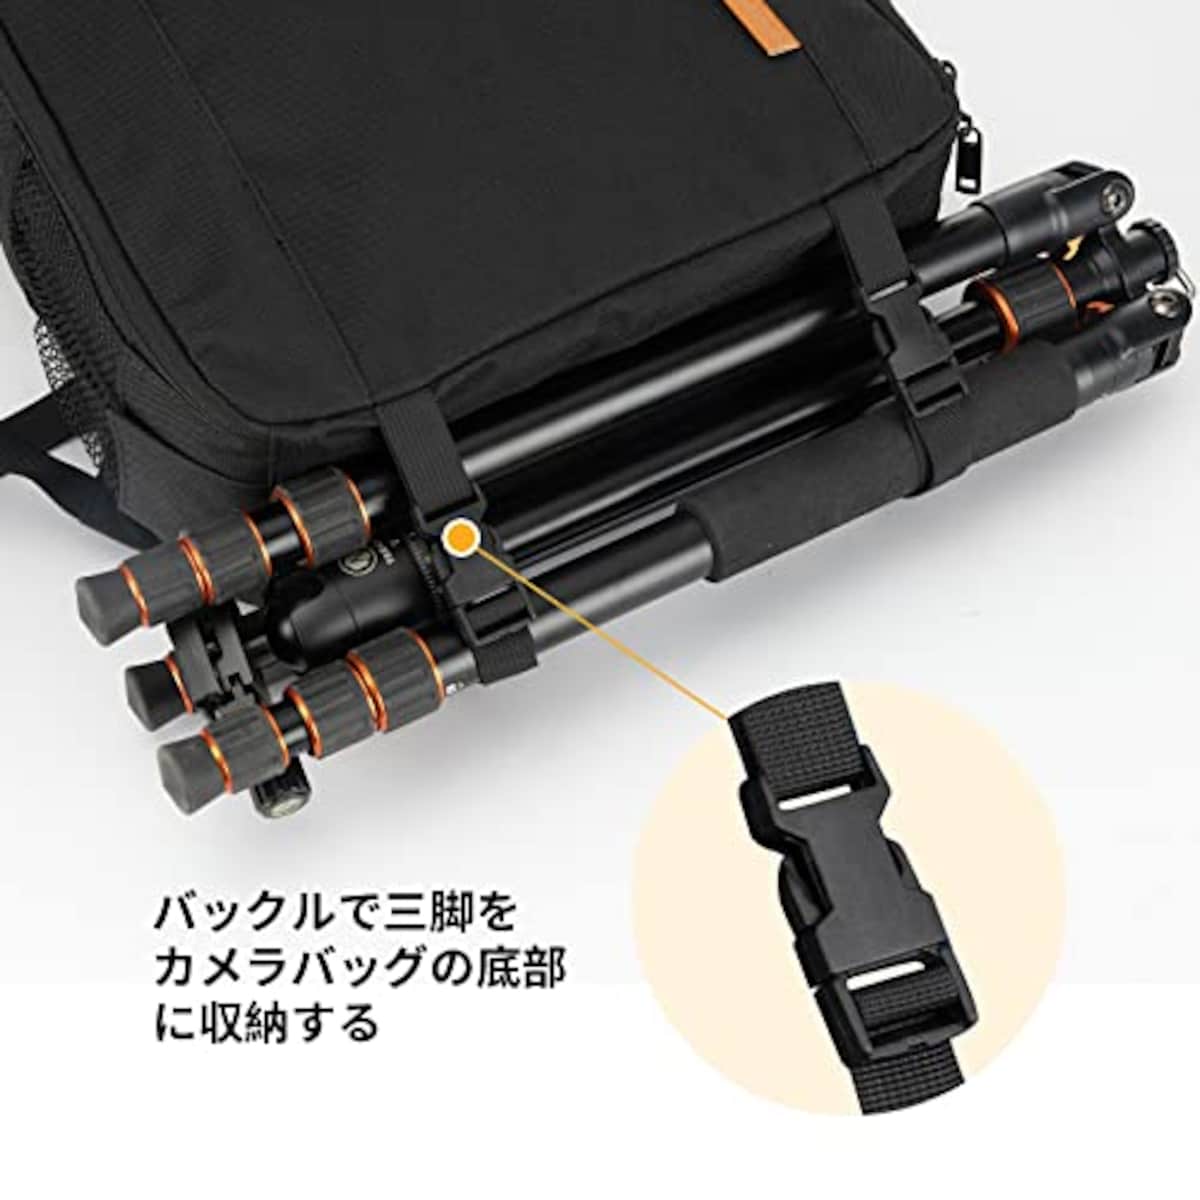  TARION カメラバッグ 軽量 コンパクト 十分な容量 三脚収納 カメラバックパック レインカバー付き カメラリュック 一眼レフカメラバッグ リュック カメラ/ドローンなど適用 ブラック TBM画像3 